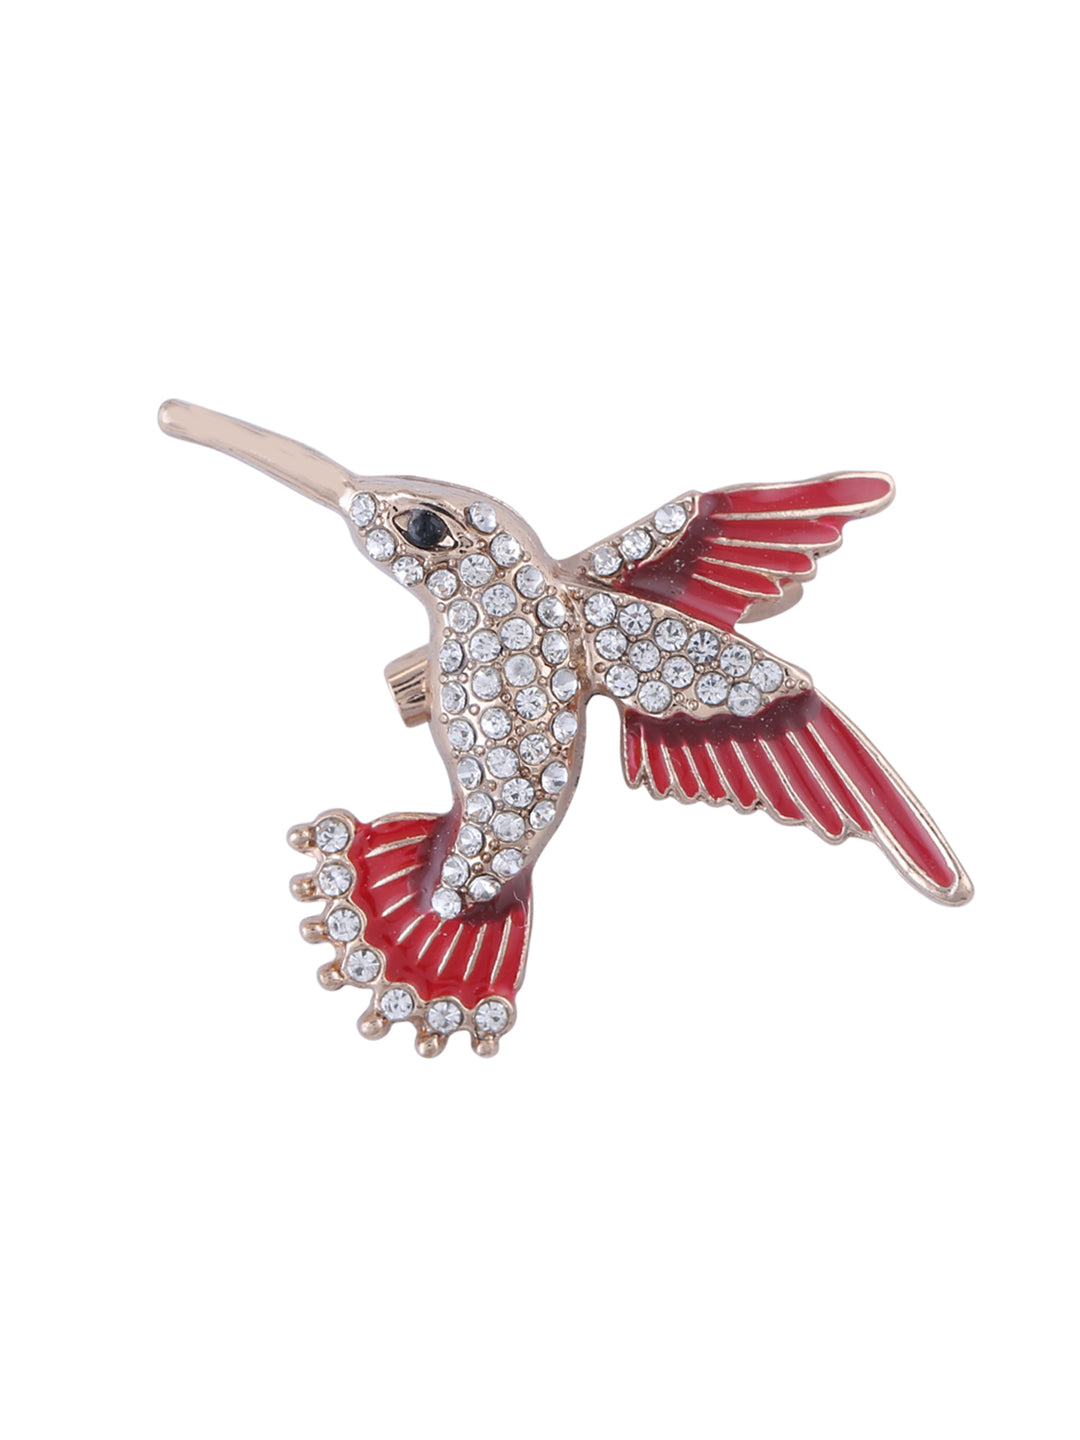 Diamond Kingfisher Bird Brooch with Pin back